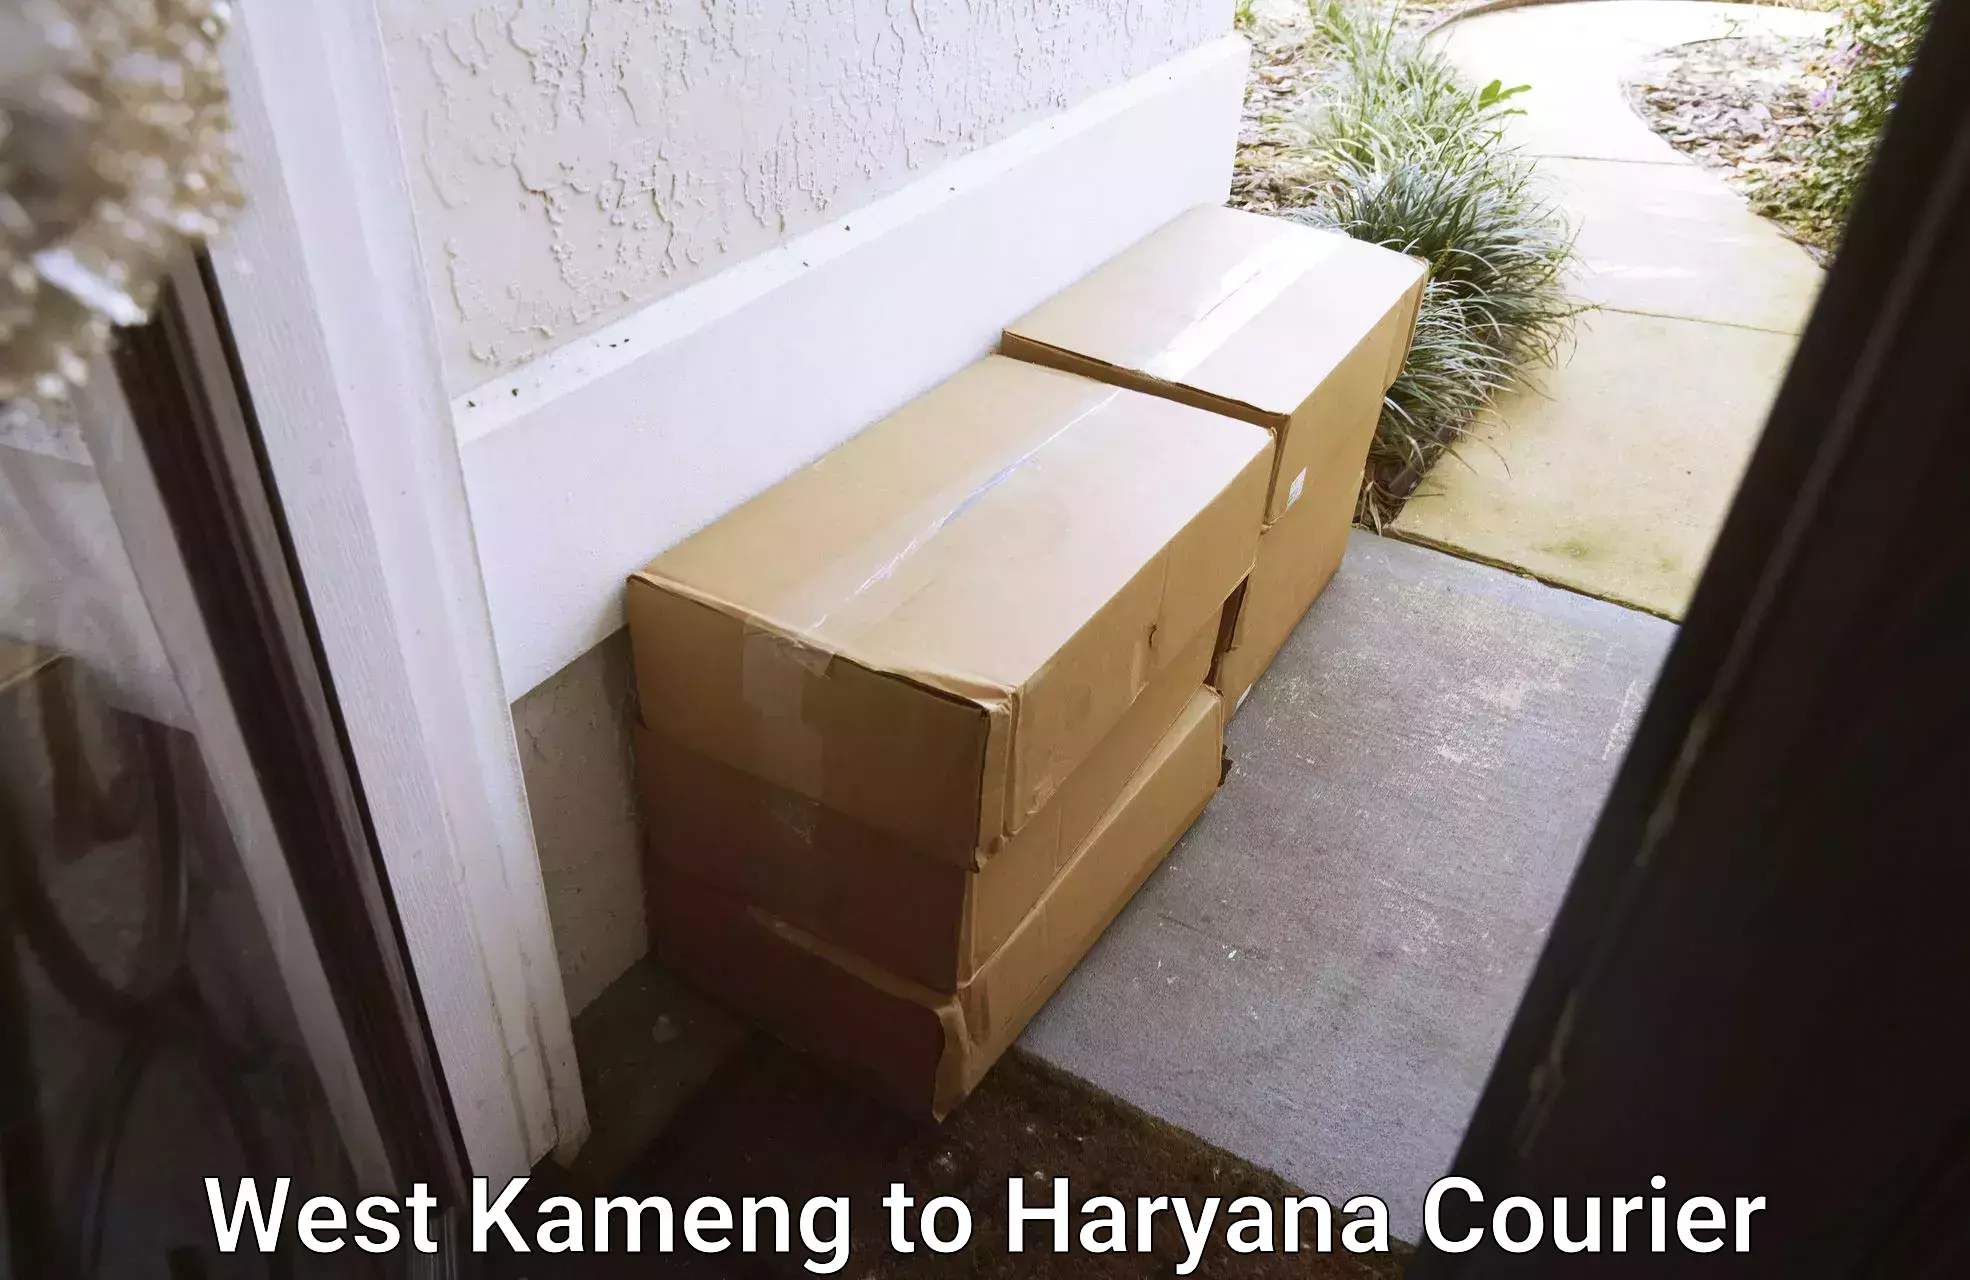 Courier app in West Kameng to Hansi